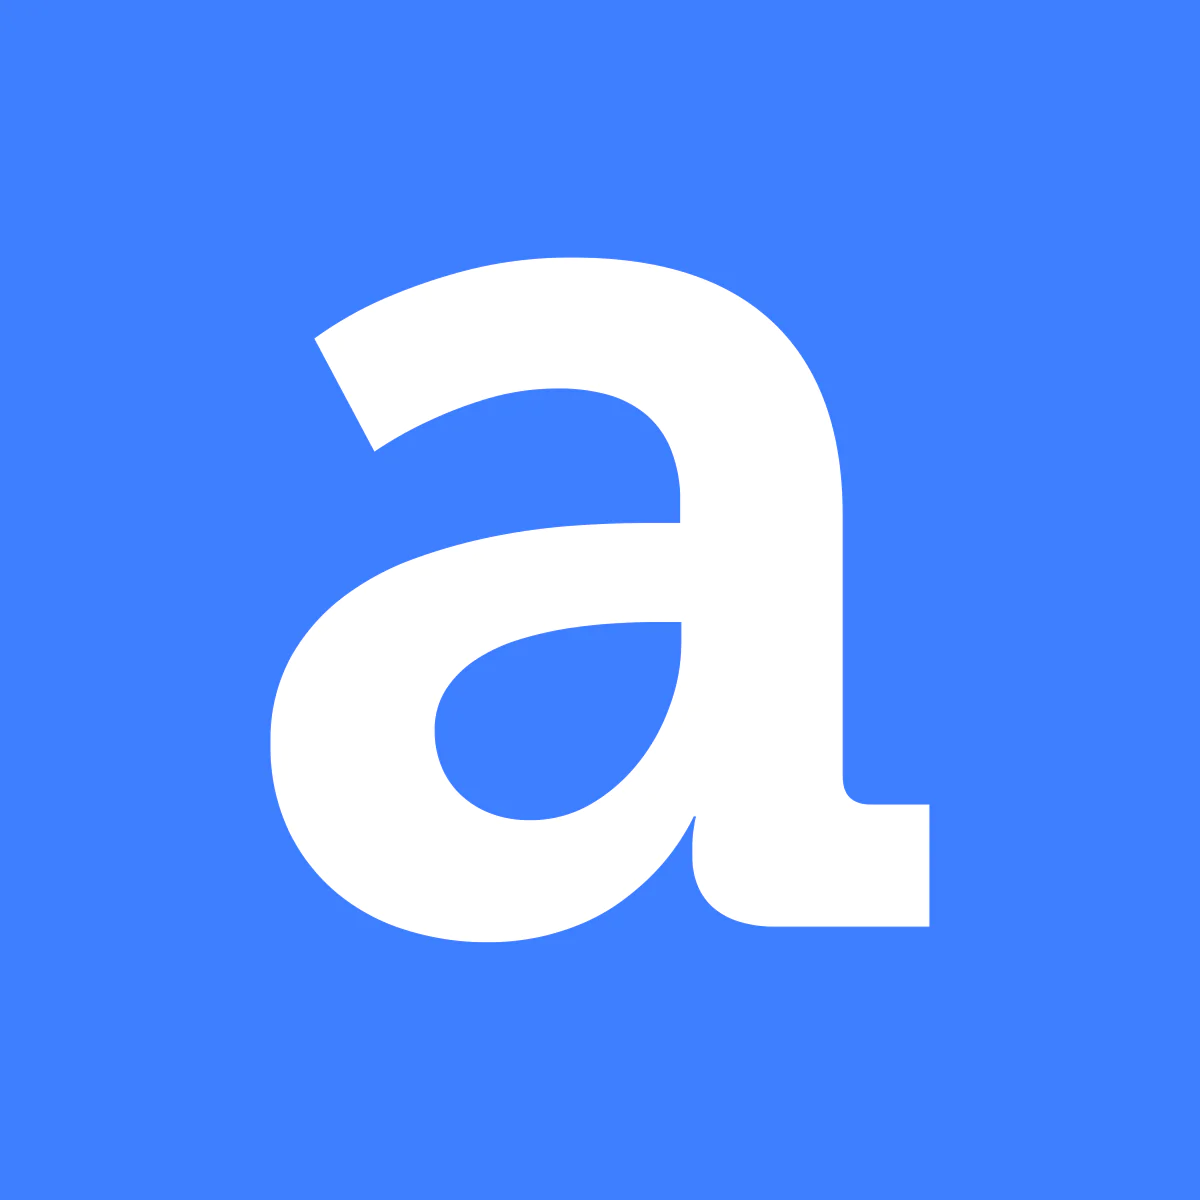 Anyword-logo